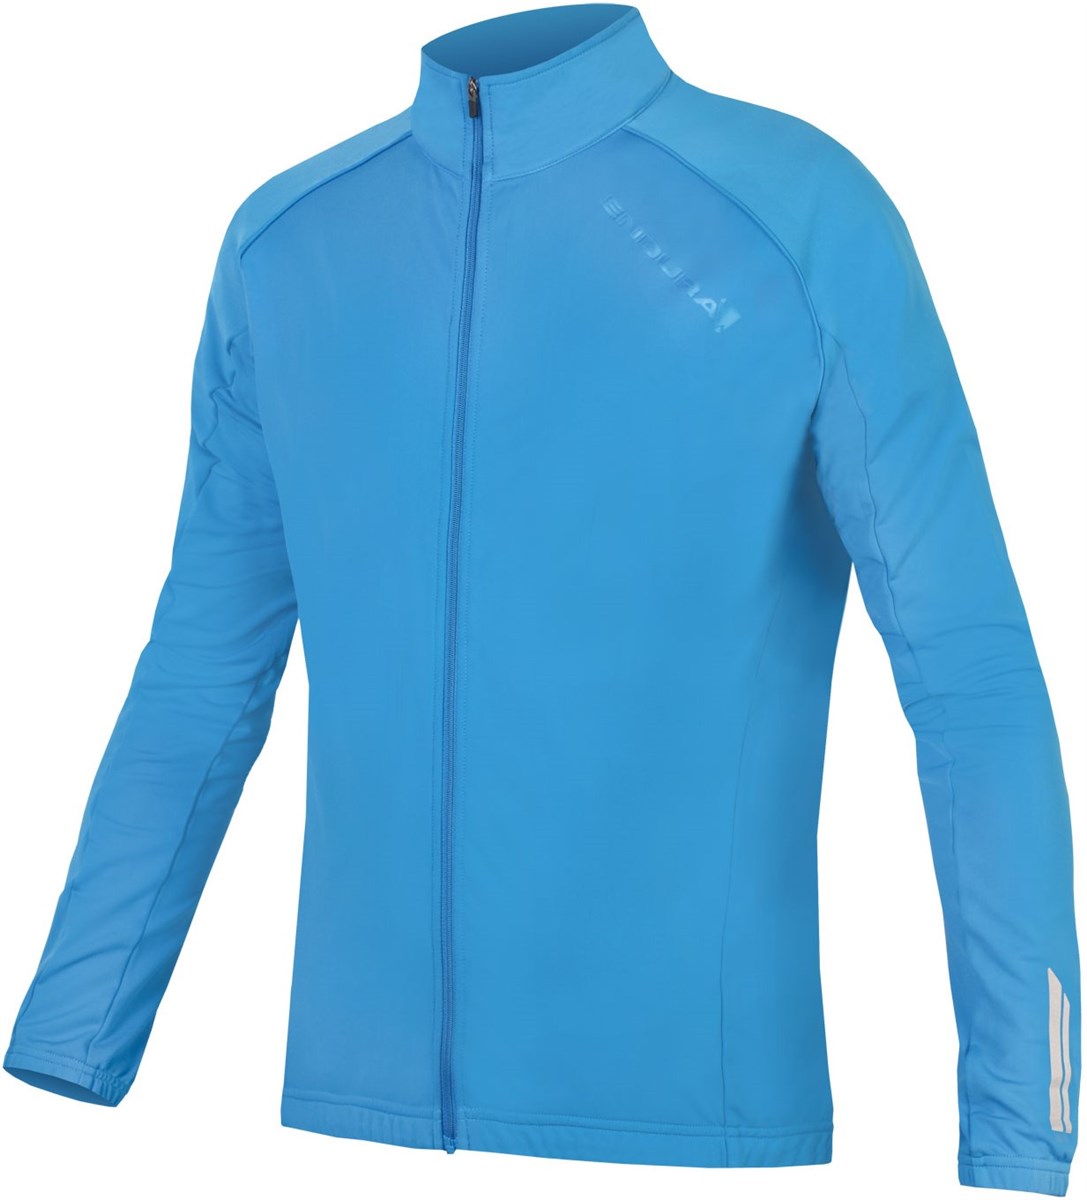 Endura Roubaix Cycling Jacket SS17 product image